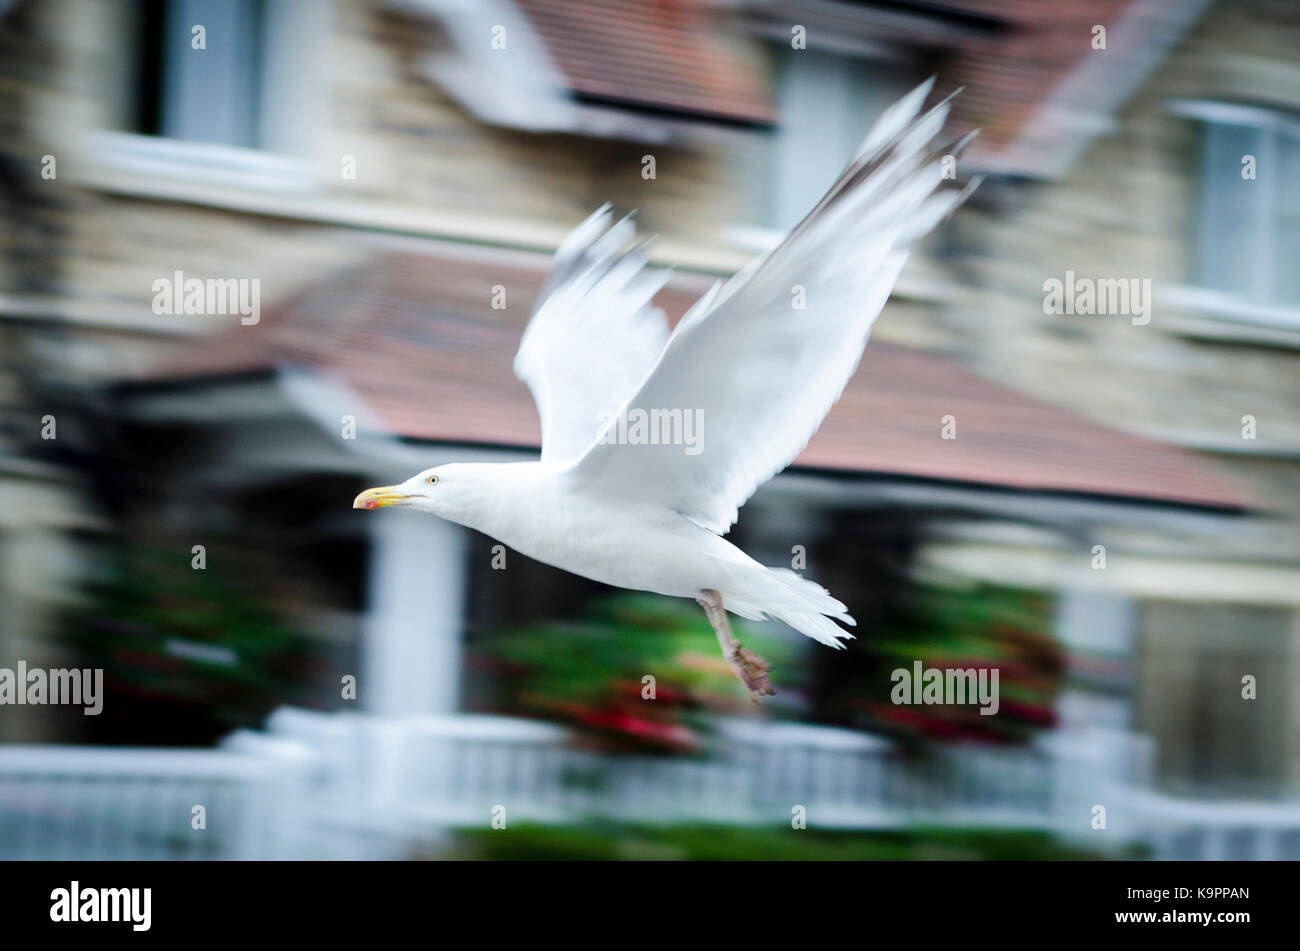 Western yellow-legged gull or seagull in flight - seabird, Laridae, Lari, Charadriiformes, movement Stock Photo